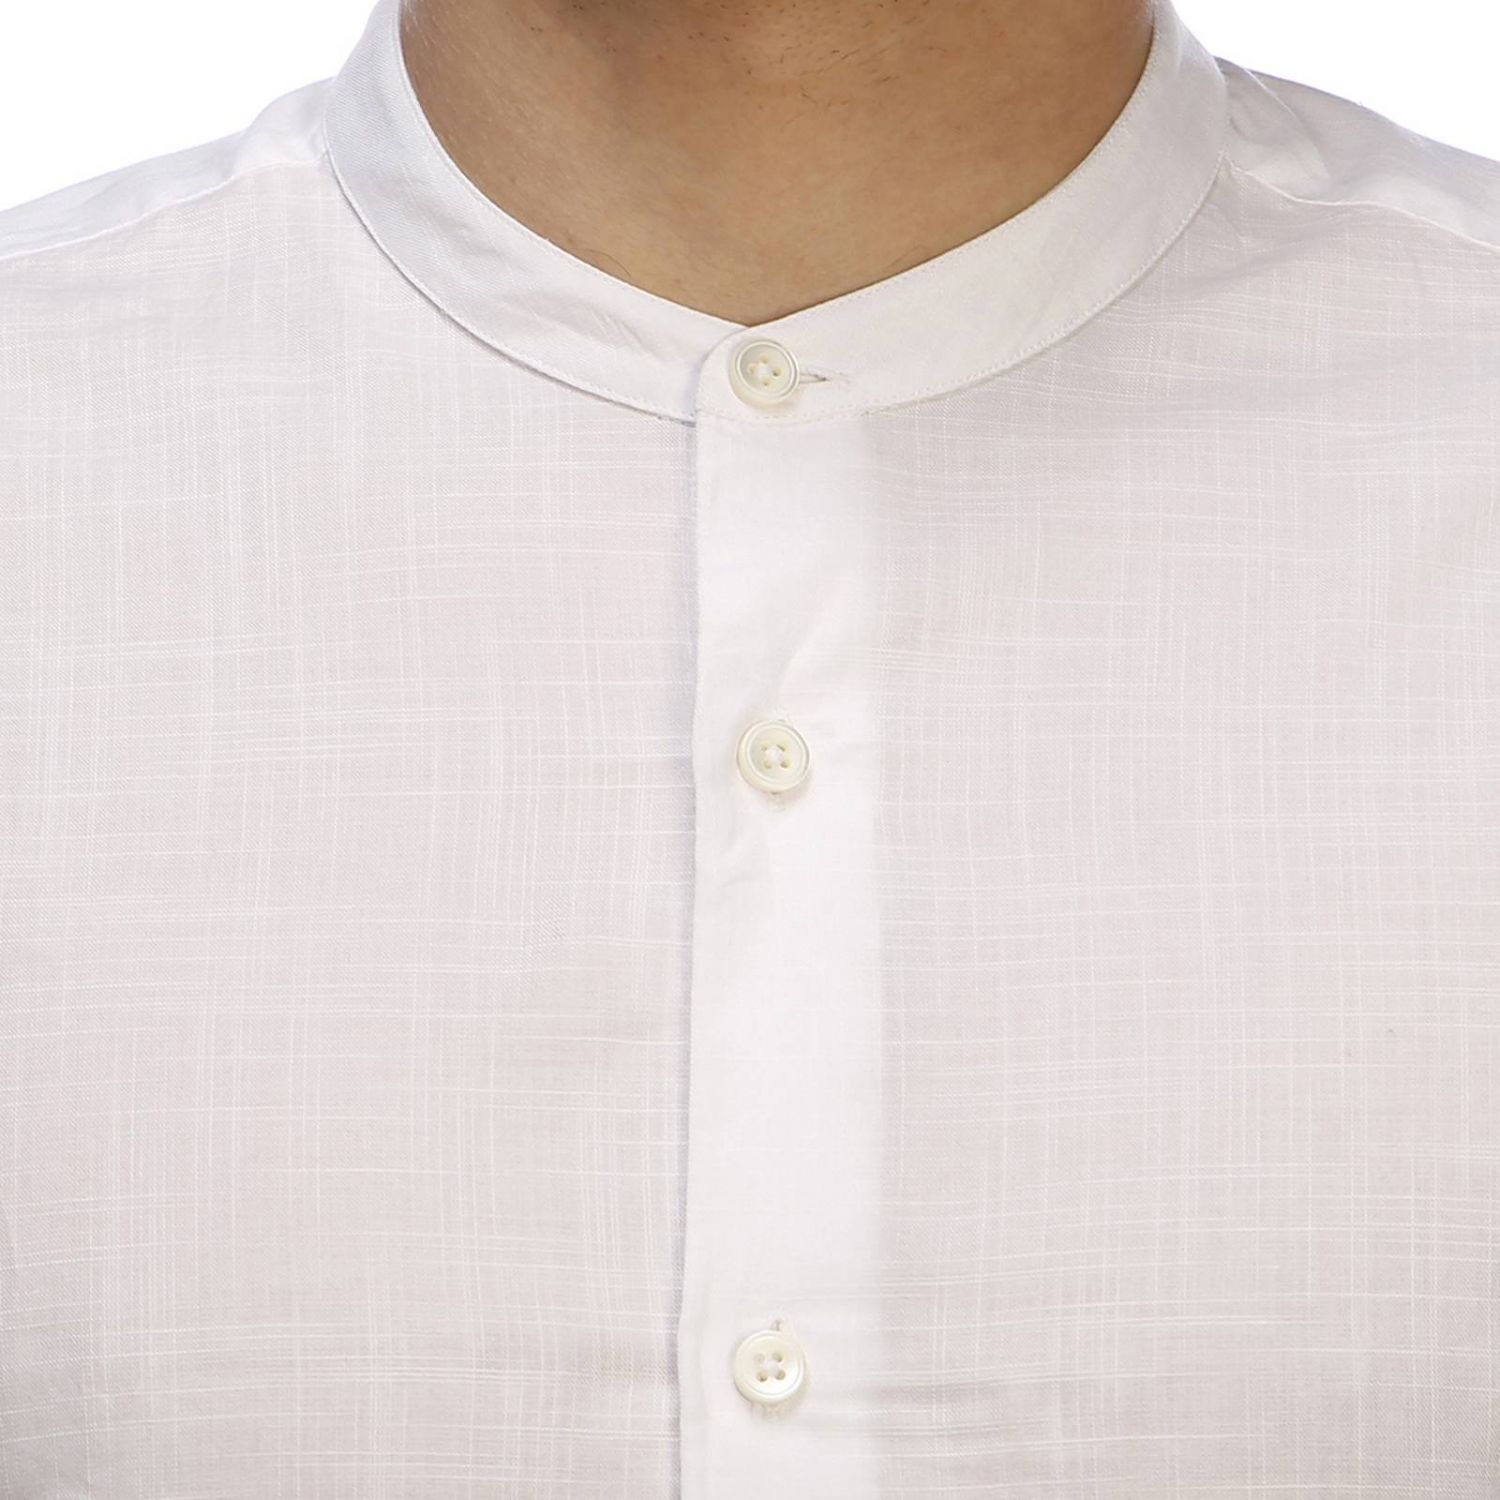 Z Zegna Outlet: shirt for man - White | Z Zegna shirt 9DTWFA 505 online ...